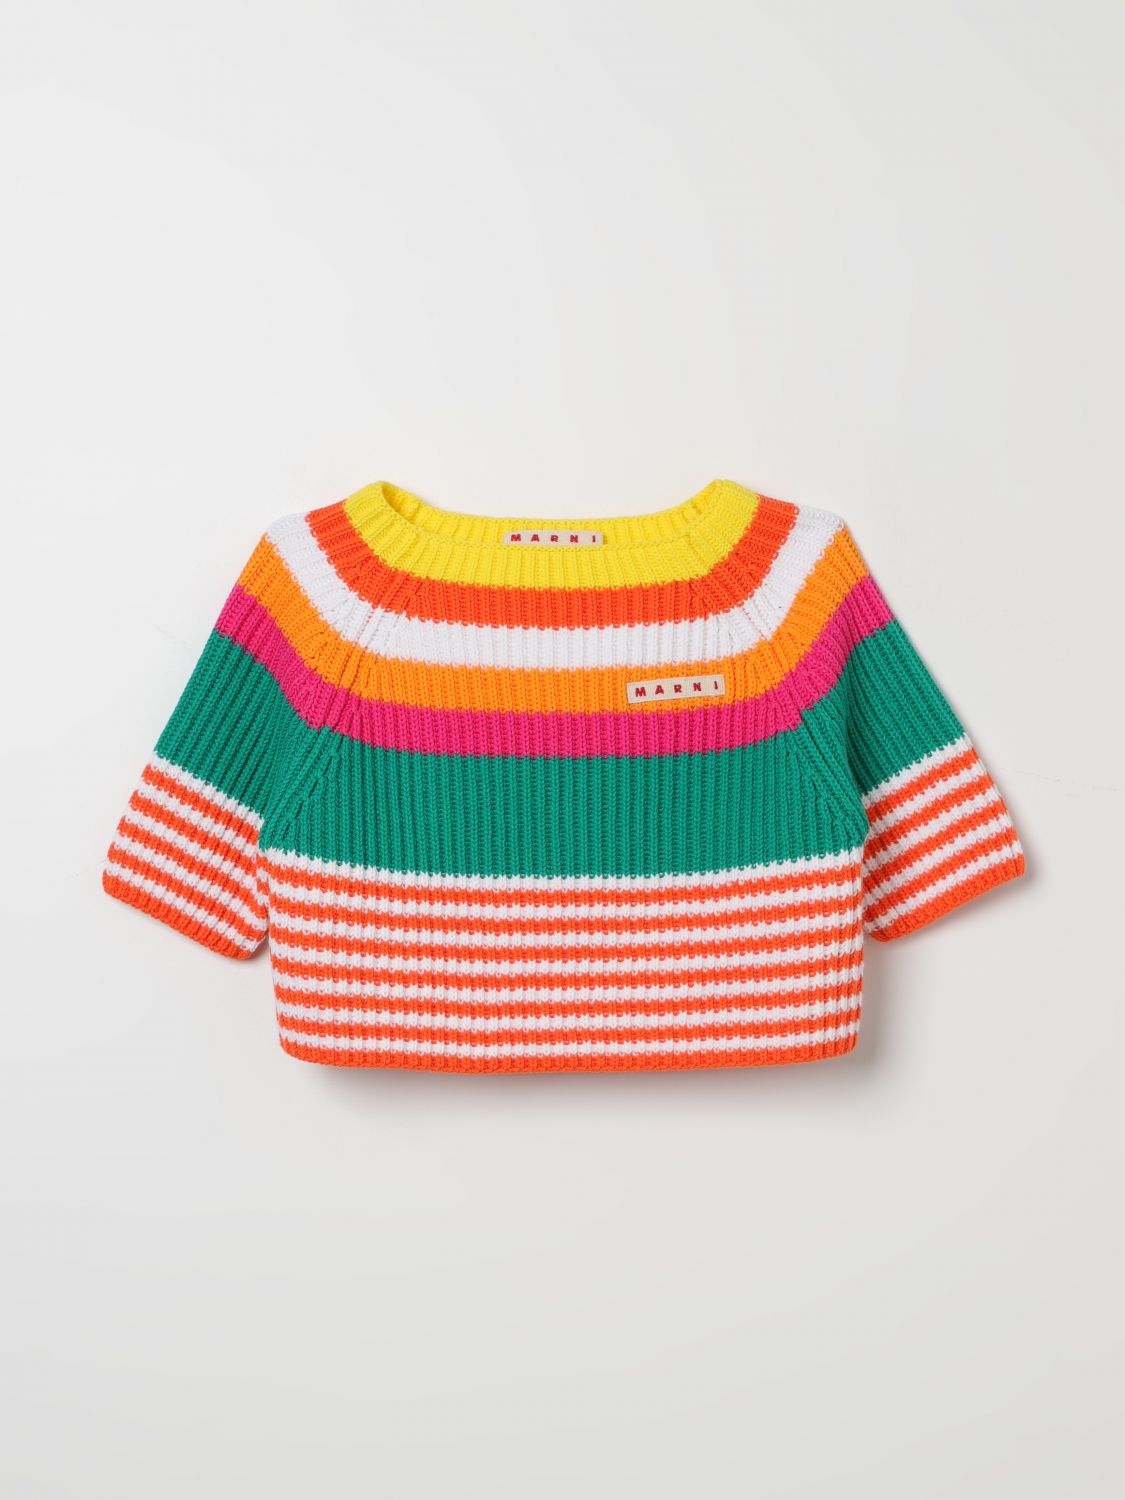 Shop Marni Sweater  Kids Color Orange